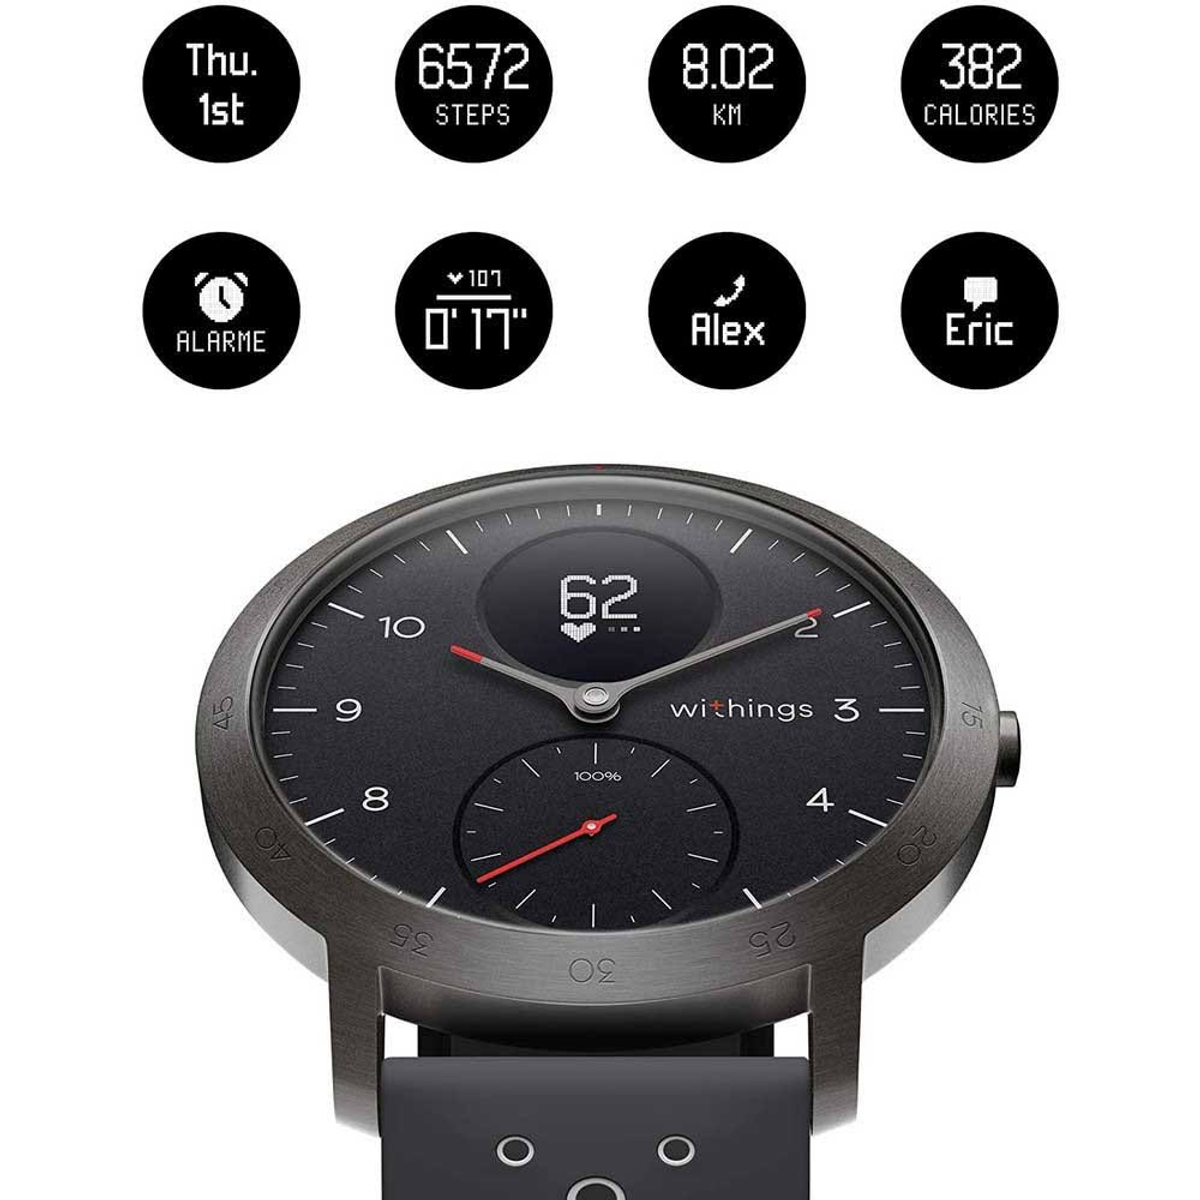 SPORT Schwarz Smartwatch Hybrid 230 HR HWA03B-40BLACK STEEL Silikon, BLACK mm, WITHINGS